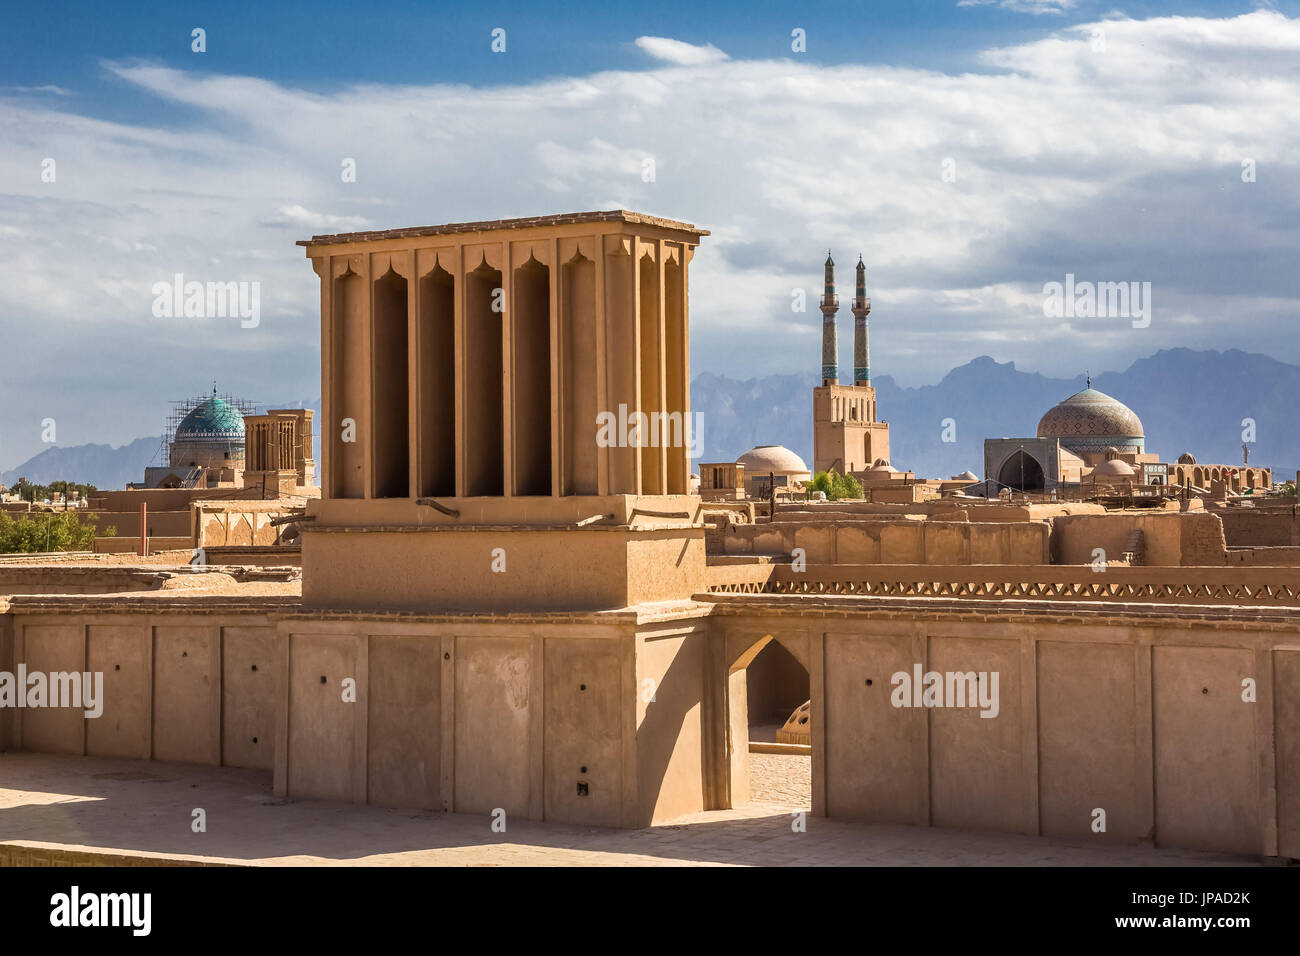 Iran, Yazd City, wind catcher tower, skyline Stock Photo